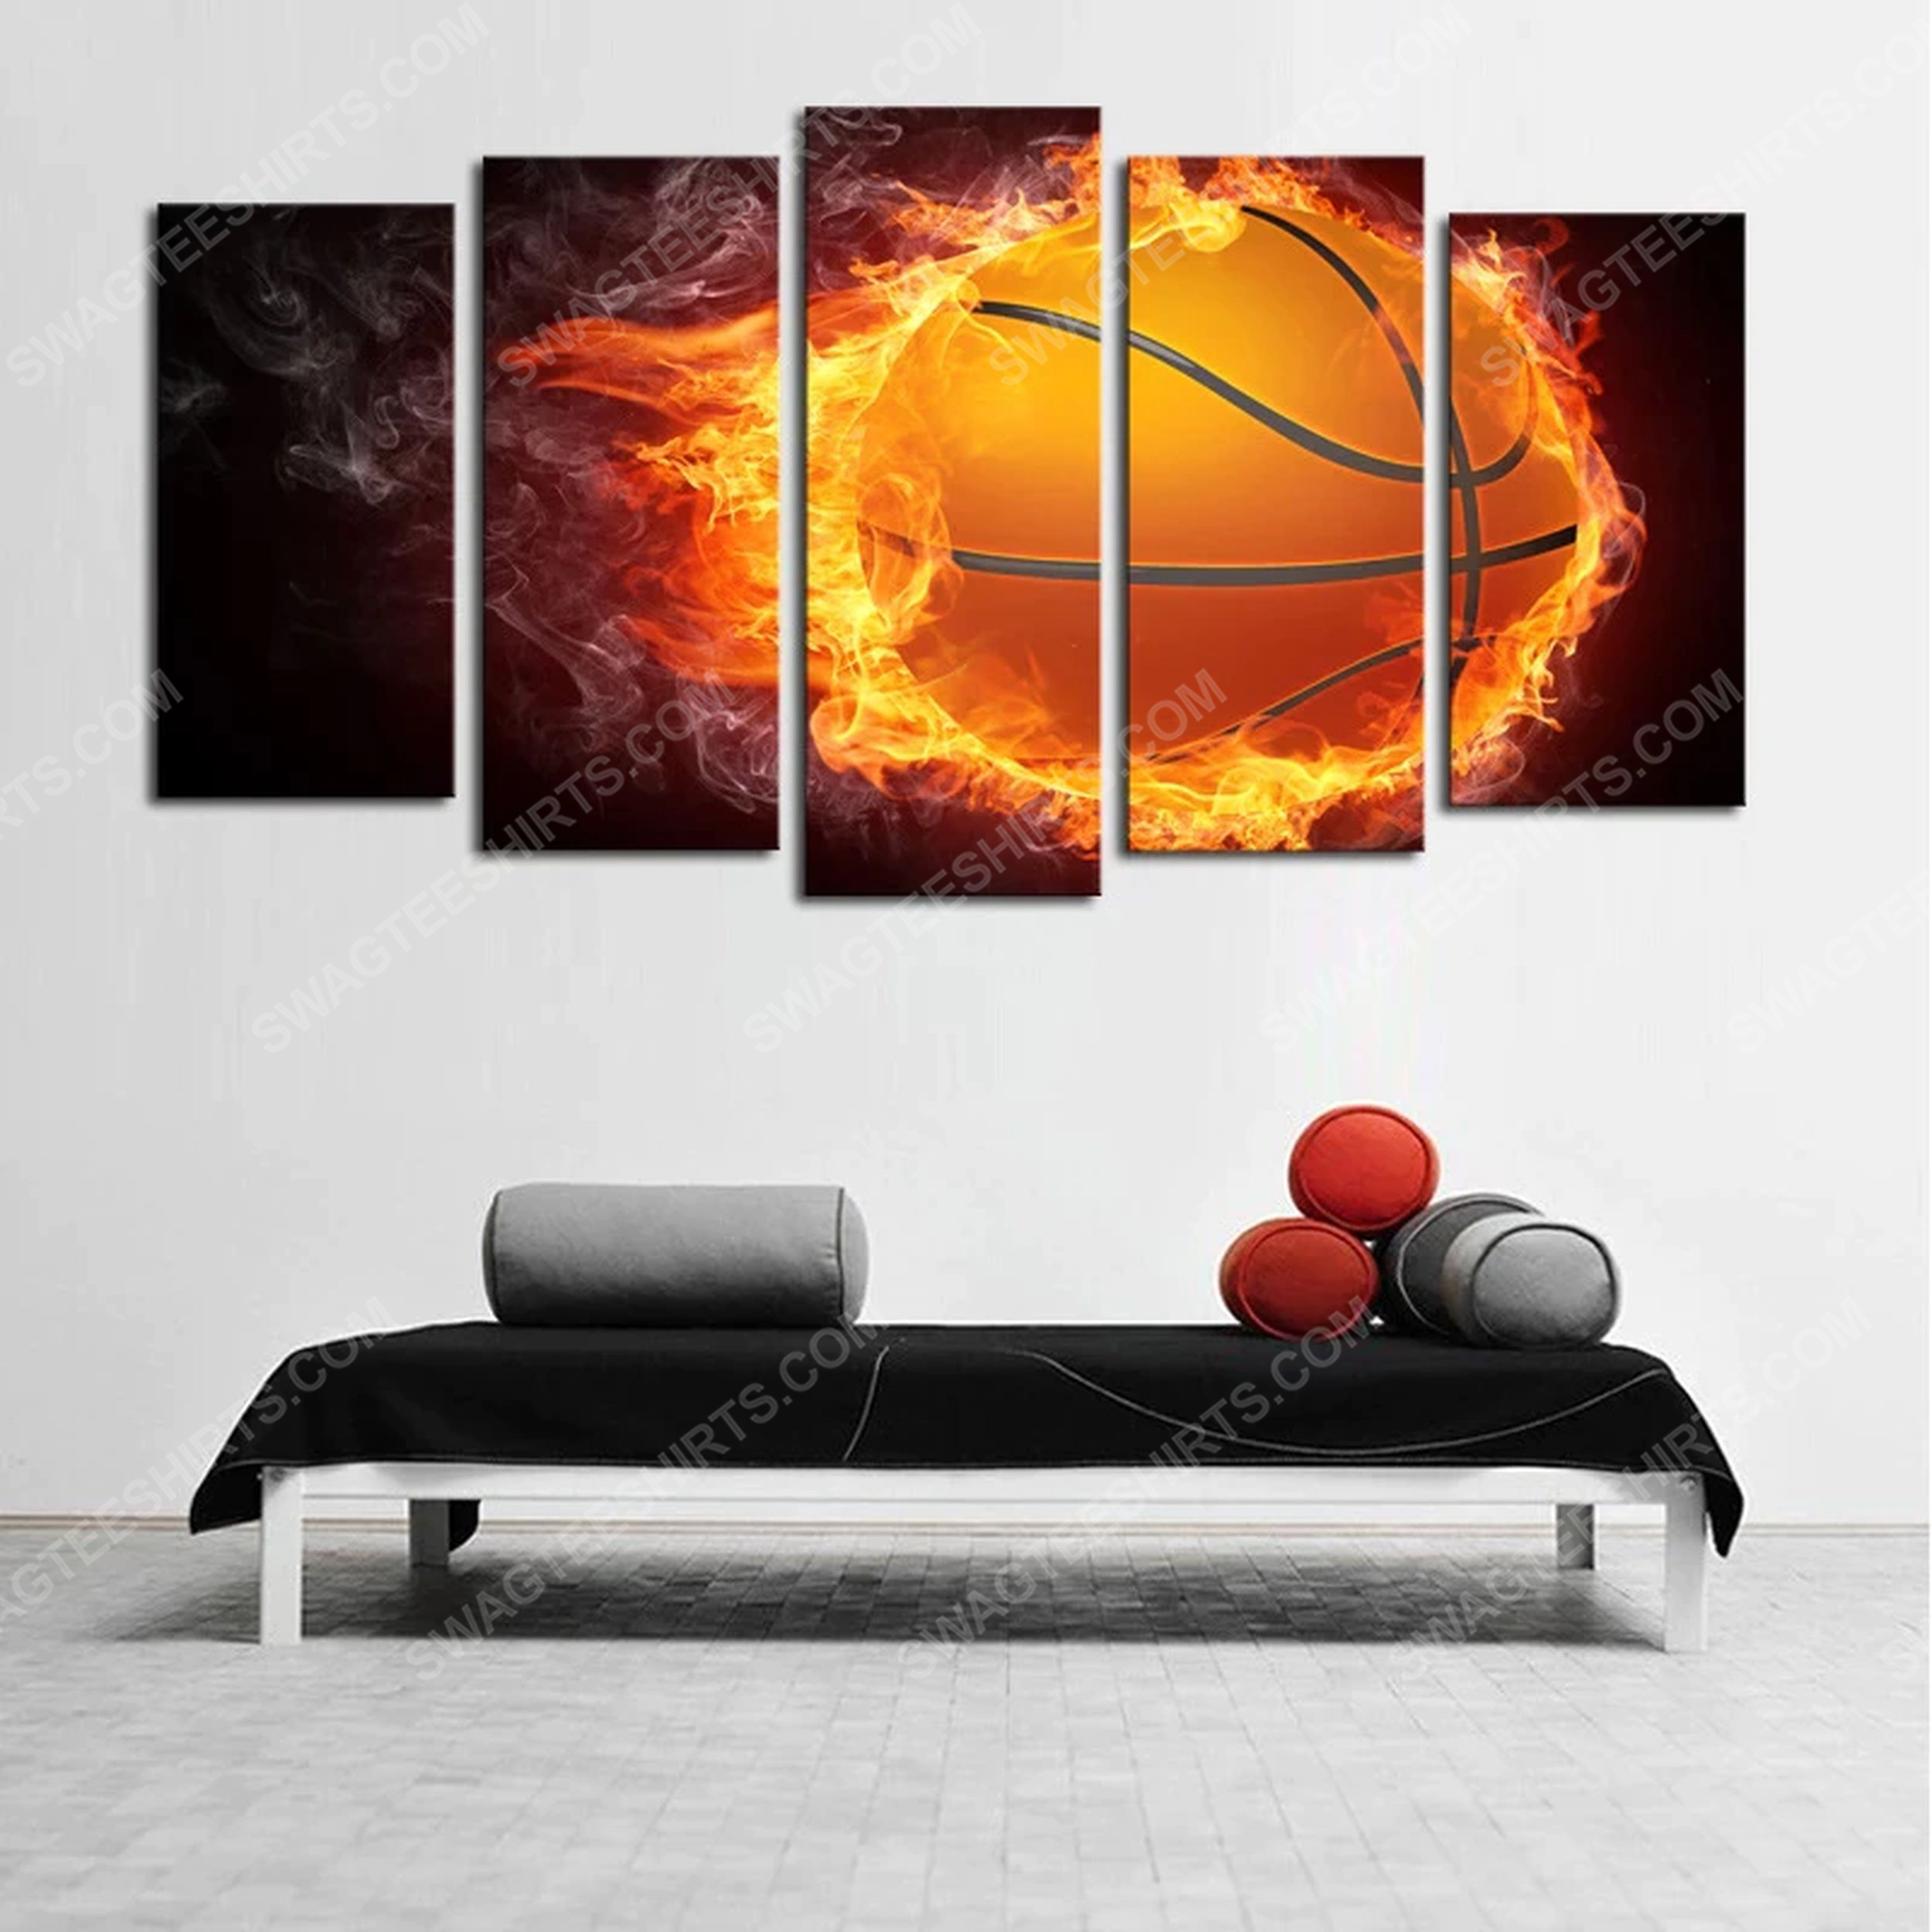 Fire basketball theme print painting canvas wall art home decor